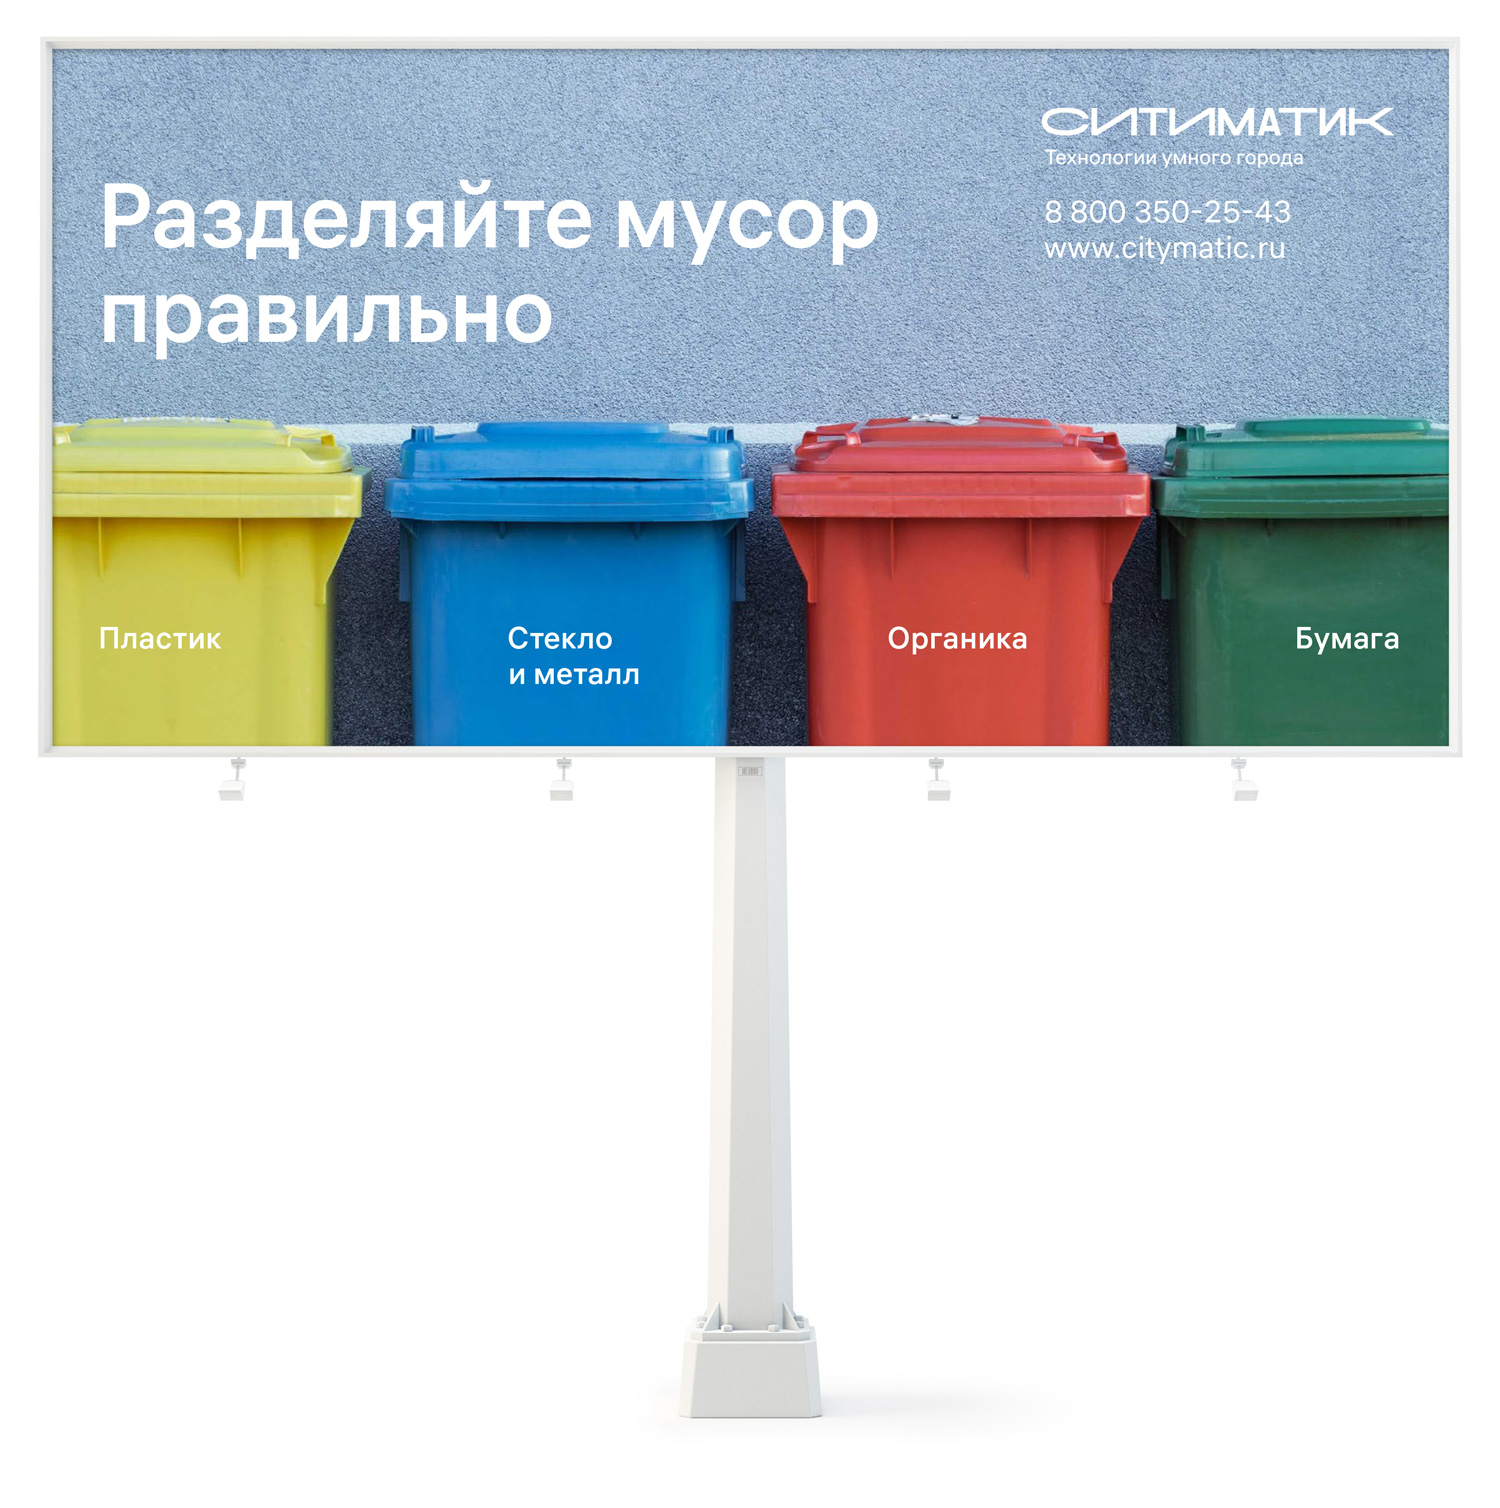 21 citymatic ru личный. Редуктант для пластика. CITYMATIC. Ohajiki для пластика. Приложение ситиматик по работе мусорных.